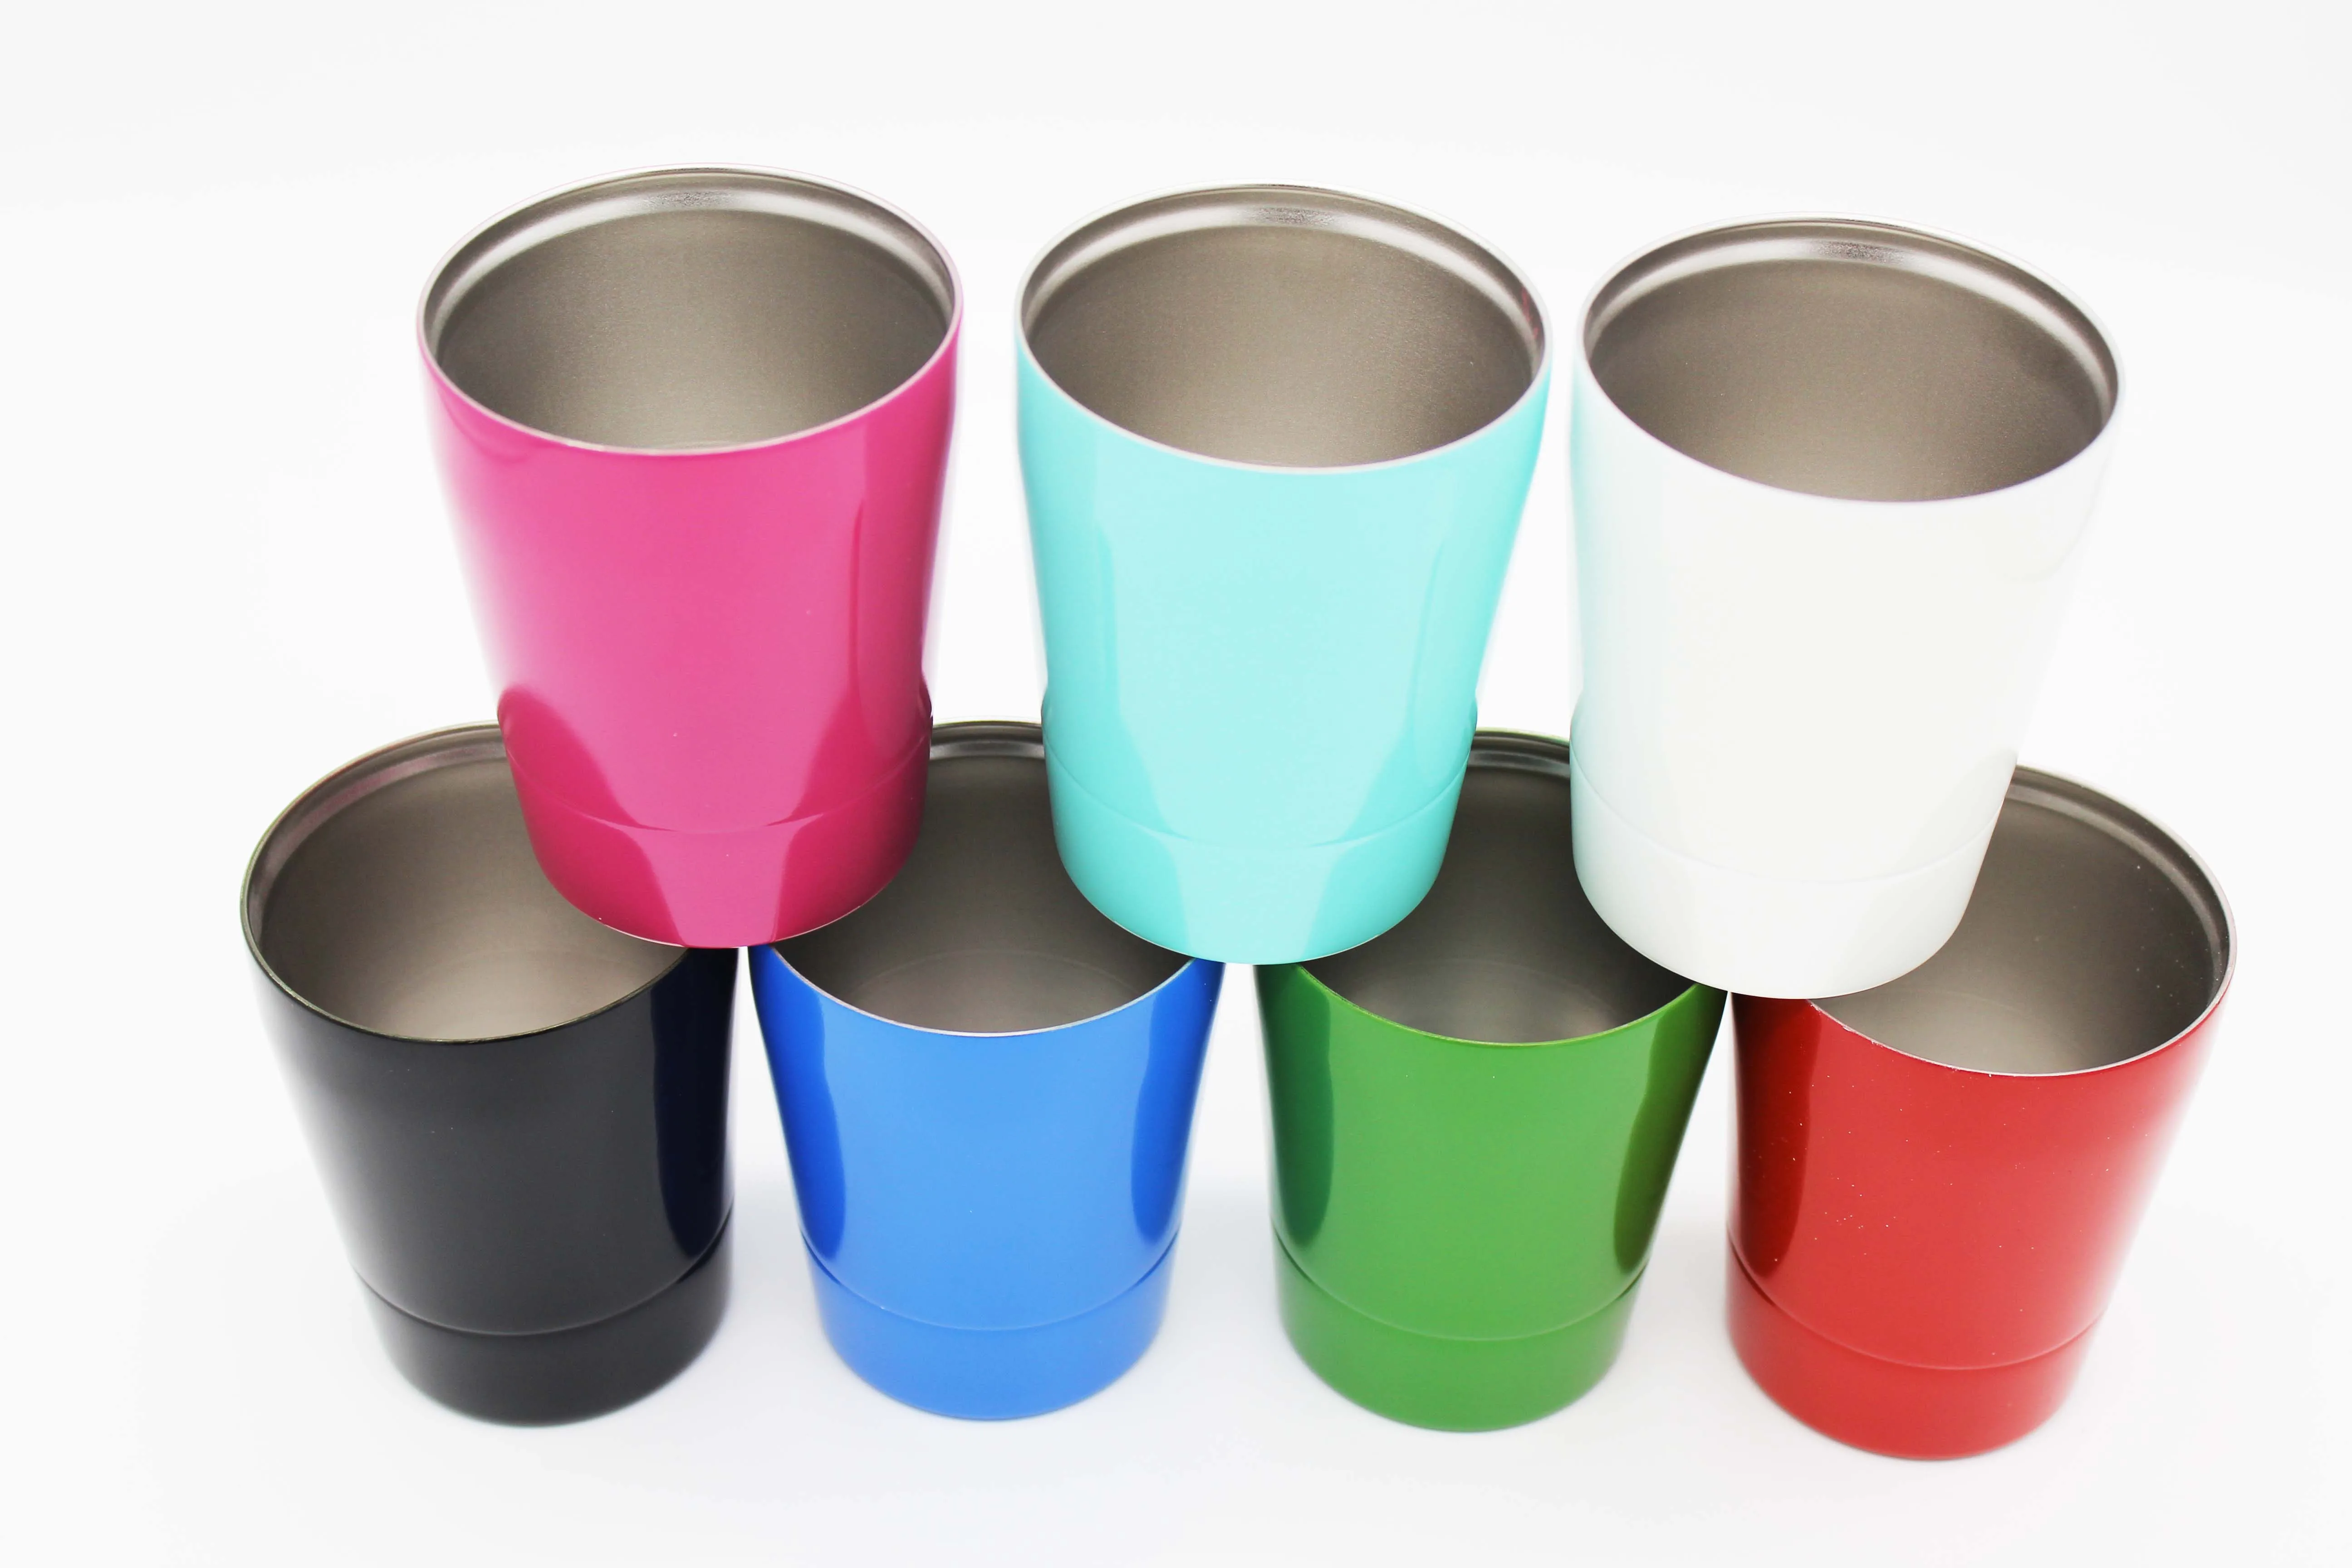 8oz Stainless Steel Vacuum Insulated Coffee Mug - Buy Stainless Steel ...